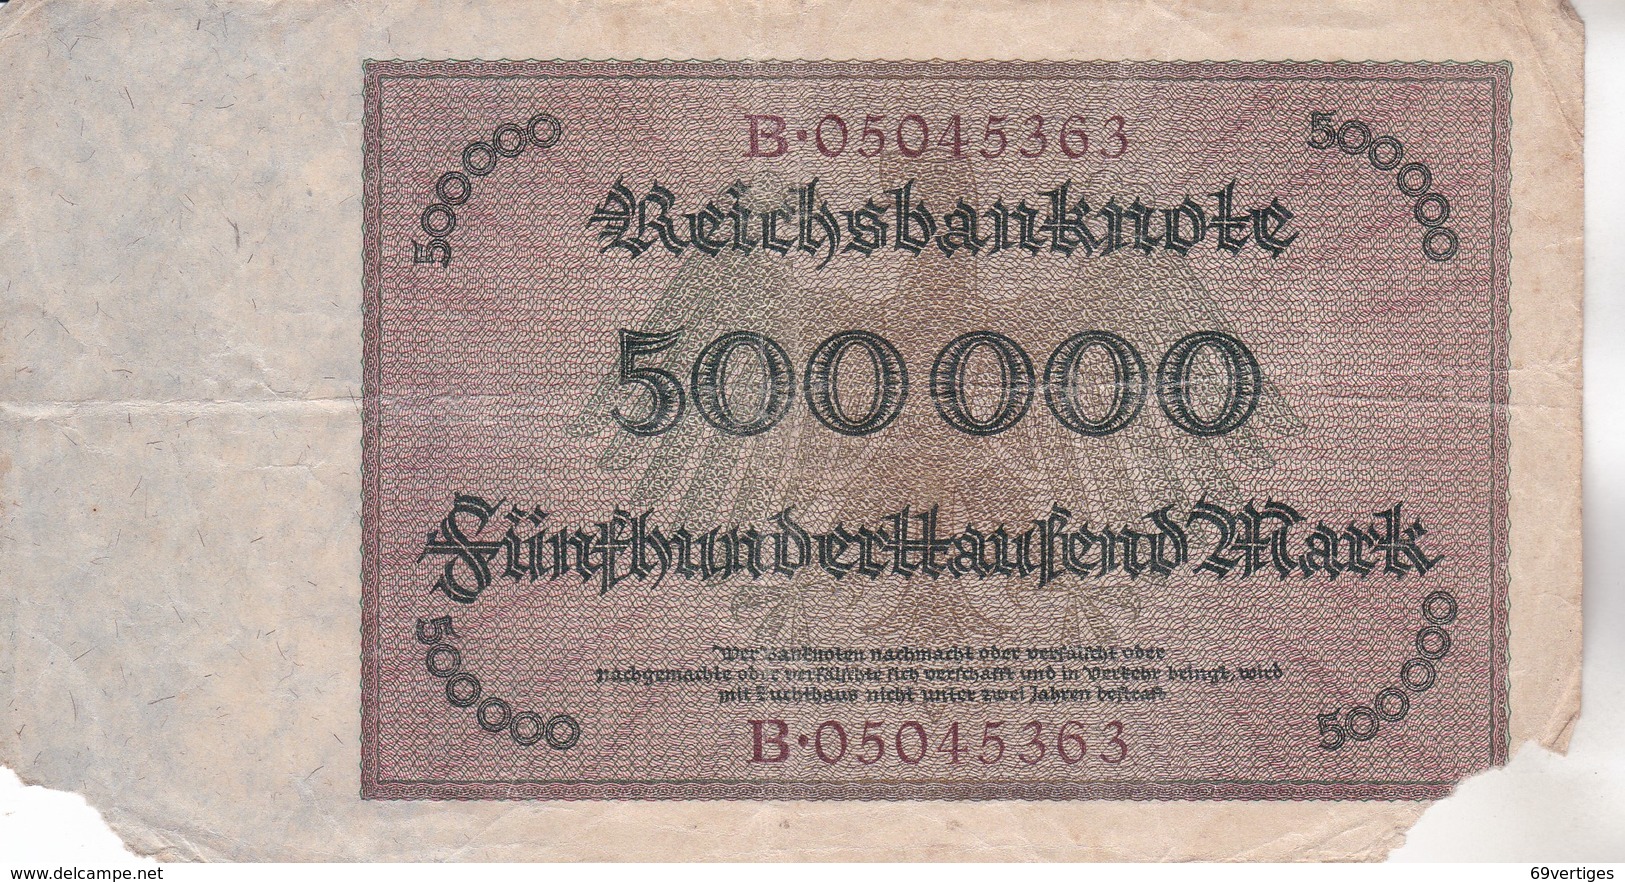 500 000 MARK, Berlin 1925, B 05045363 - 500000 Mark